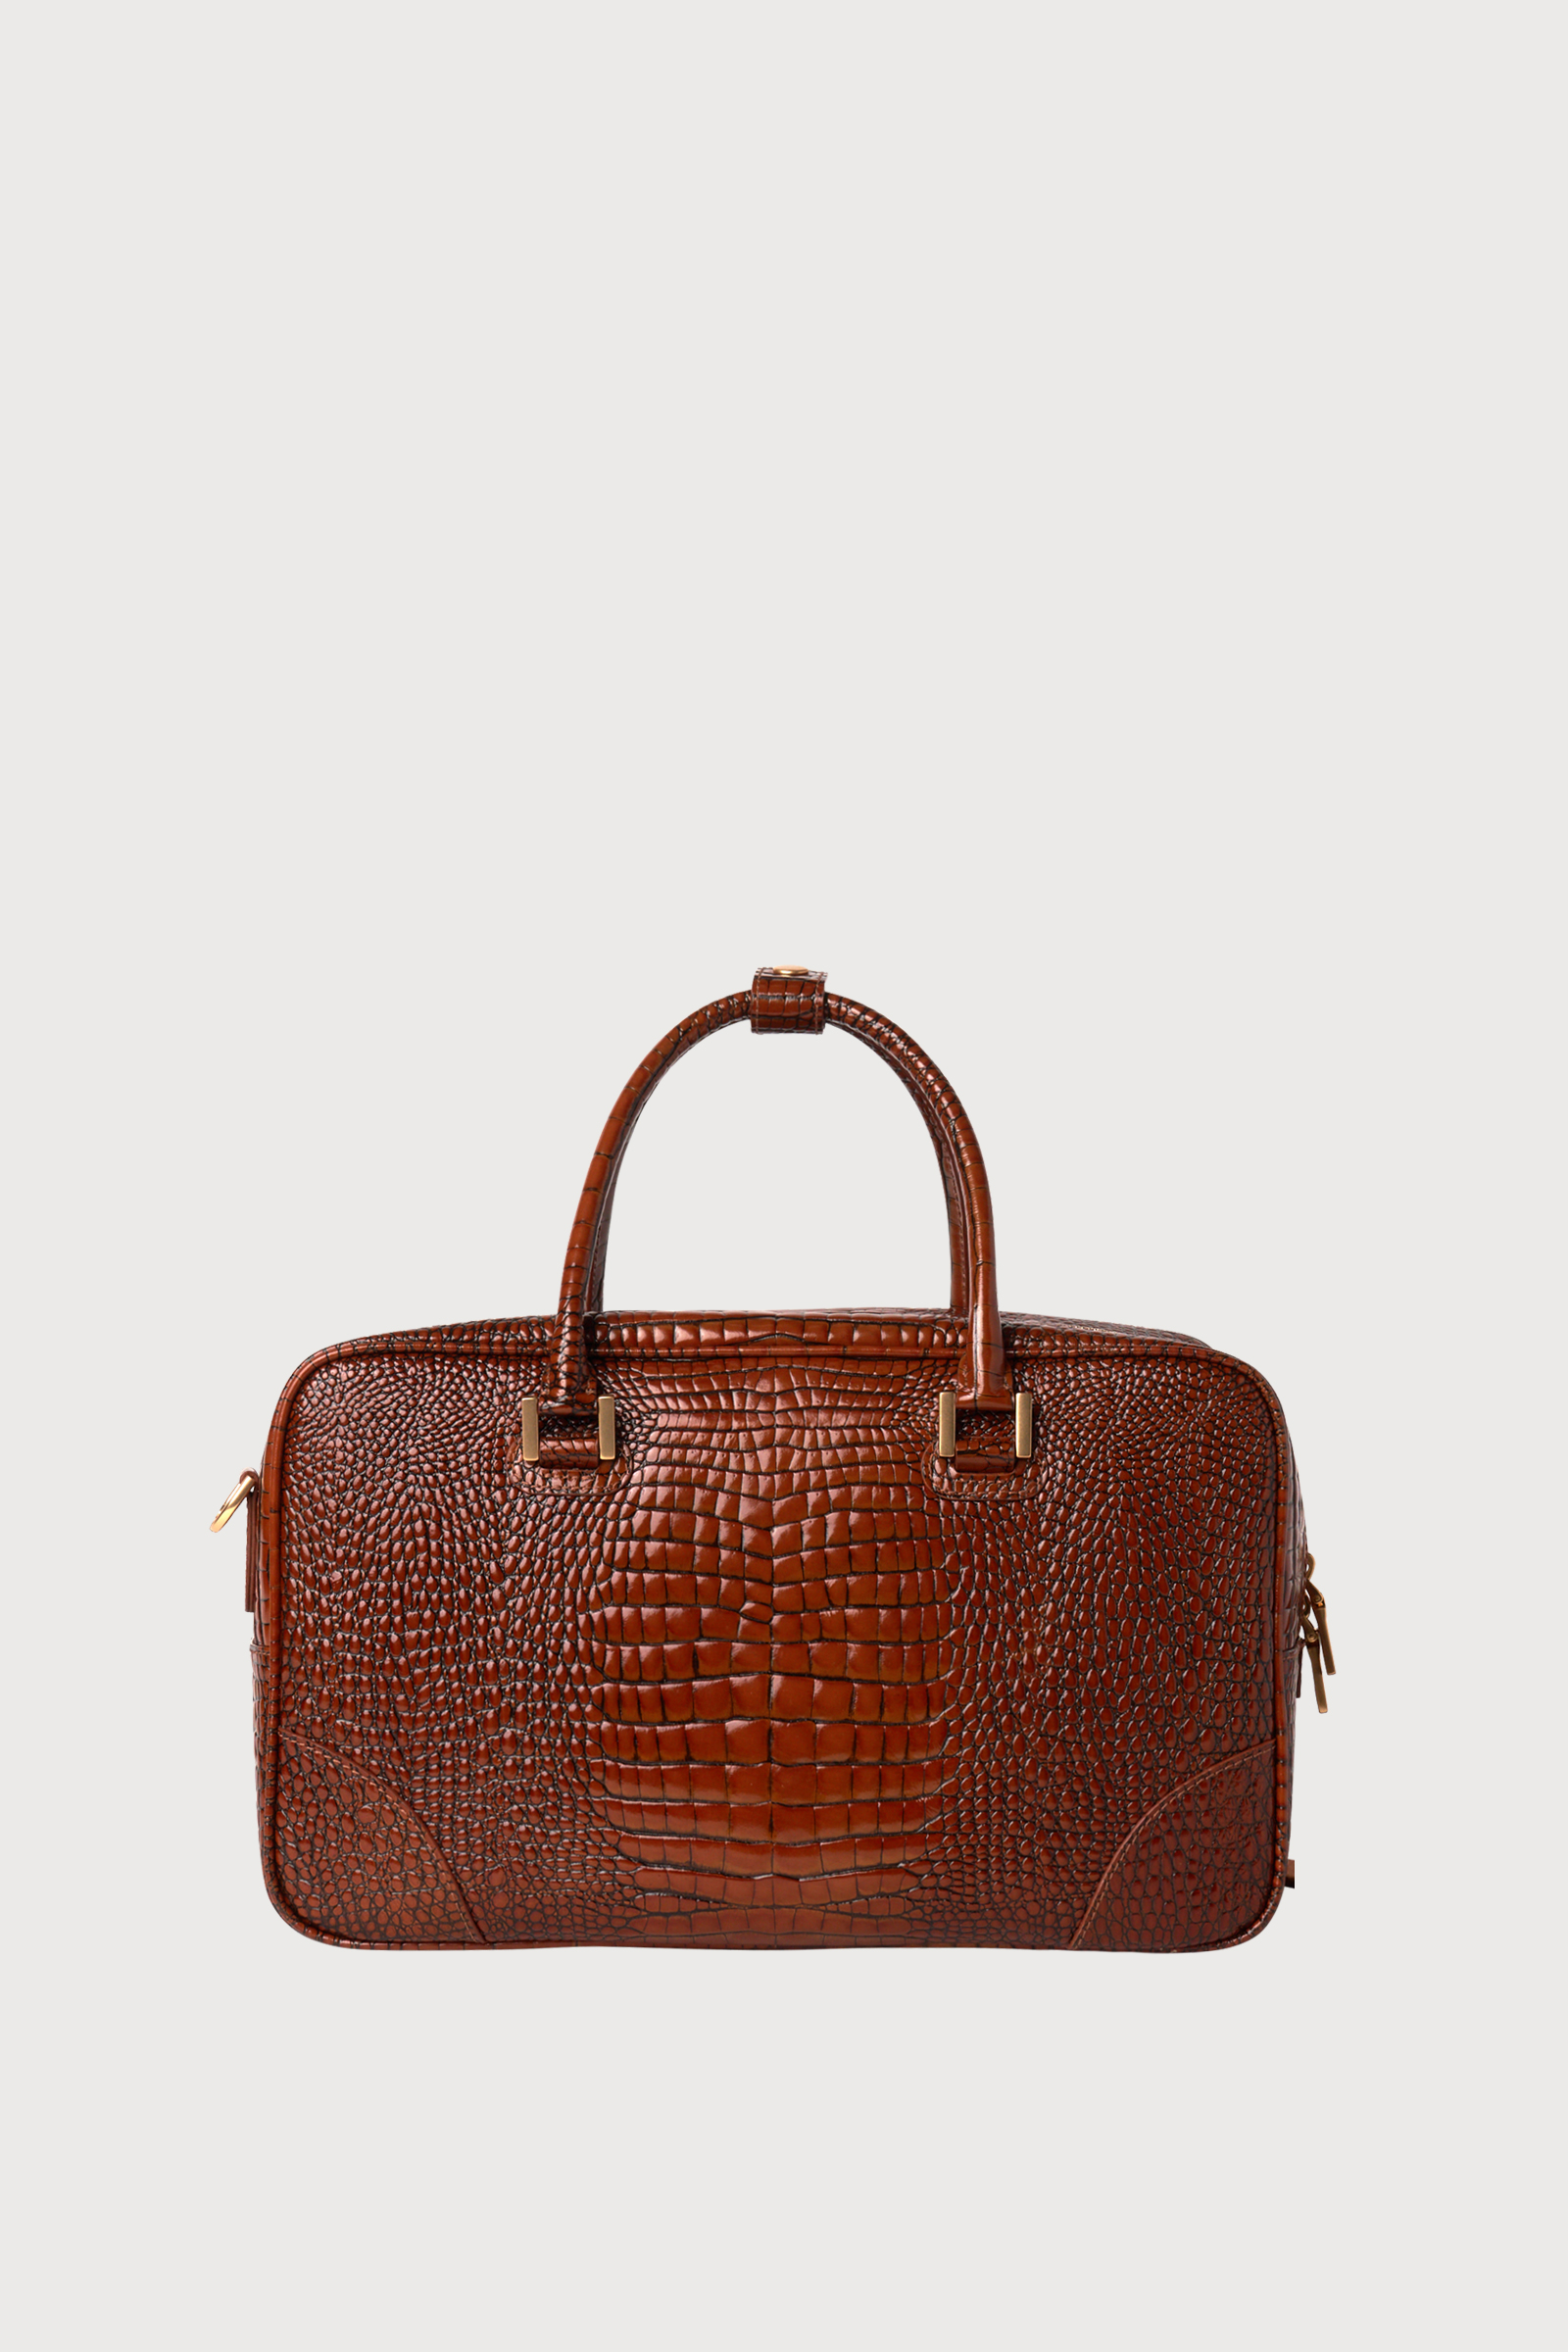 Part.5 Travel bag (croc brown)